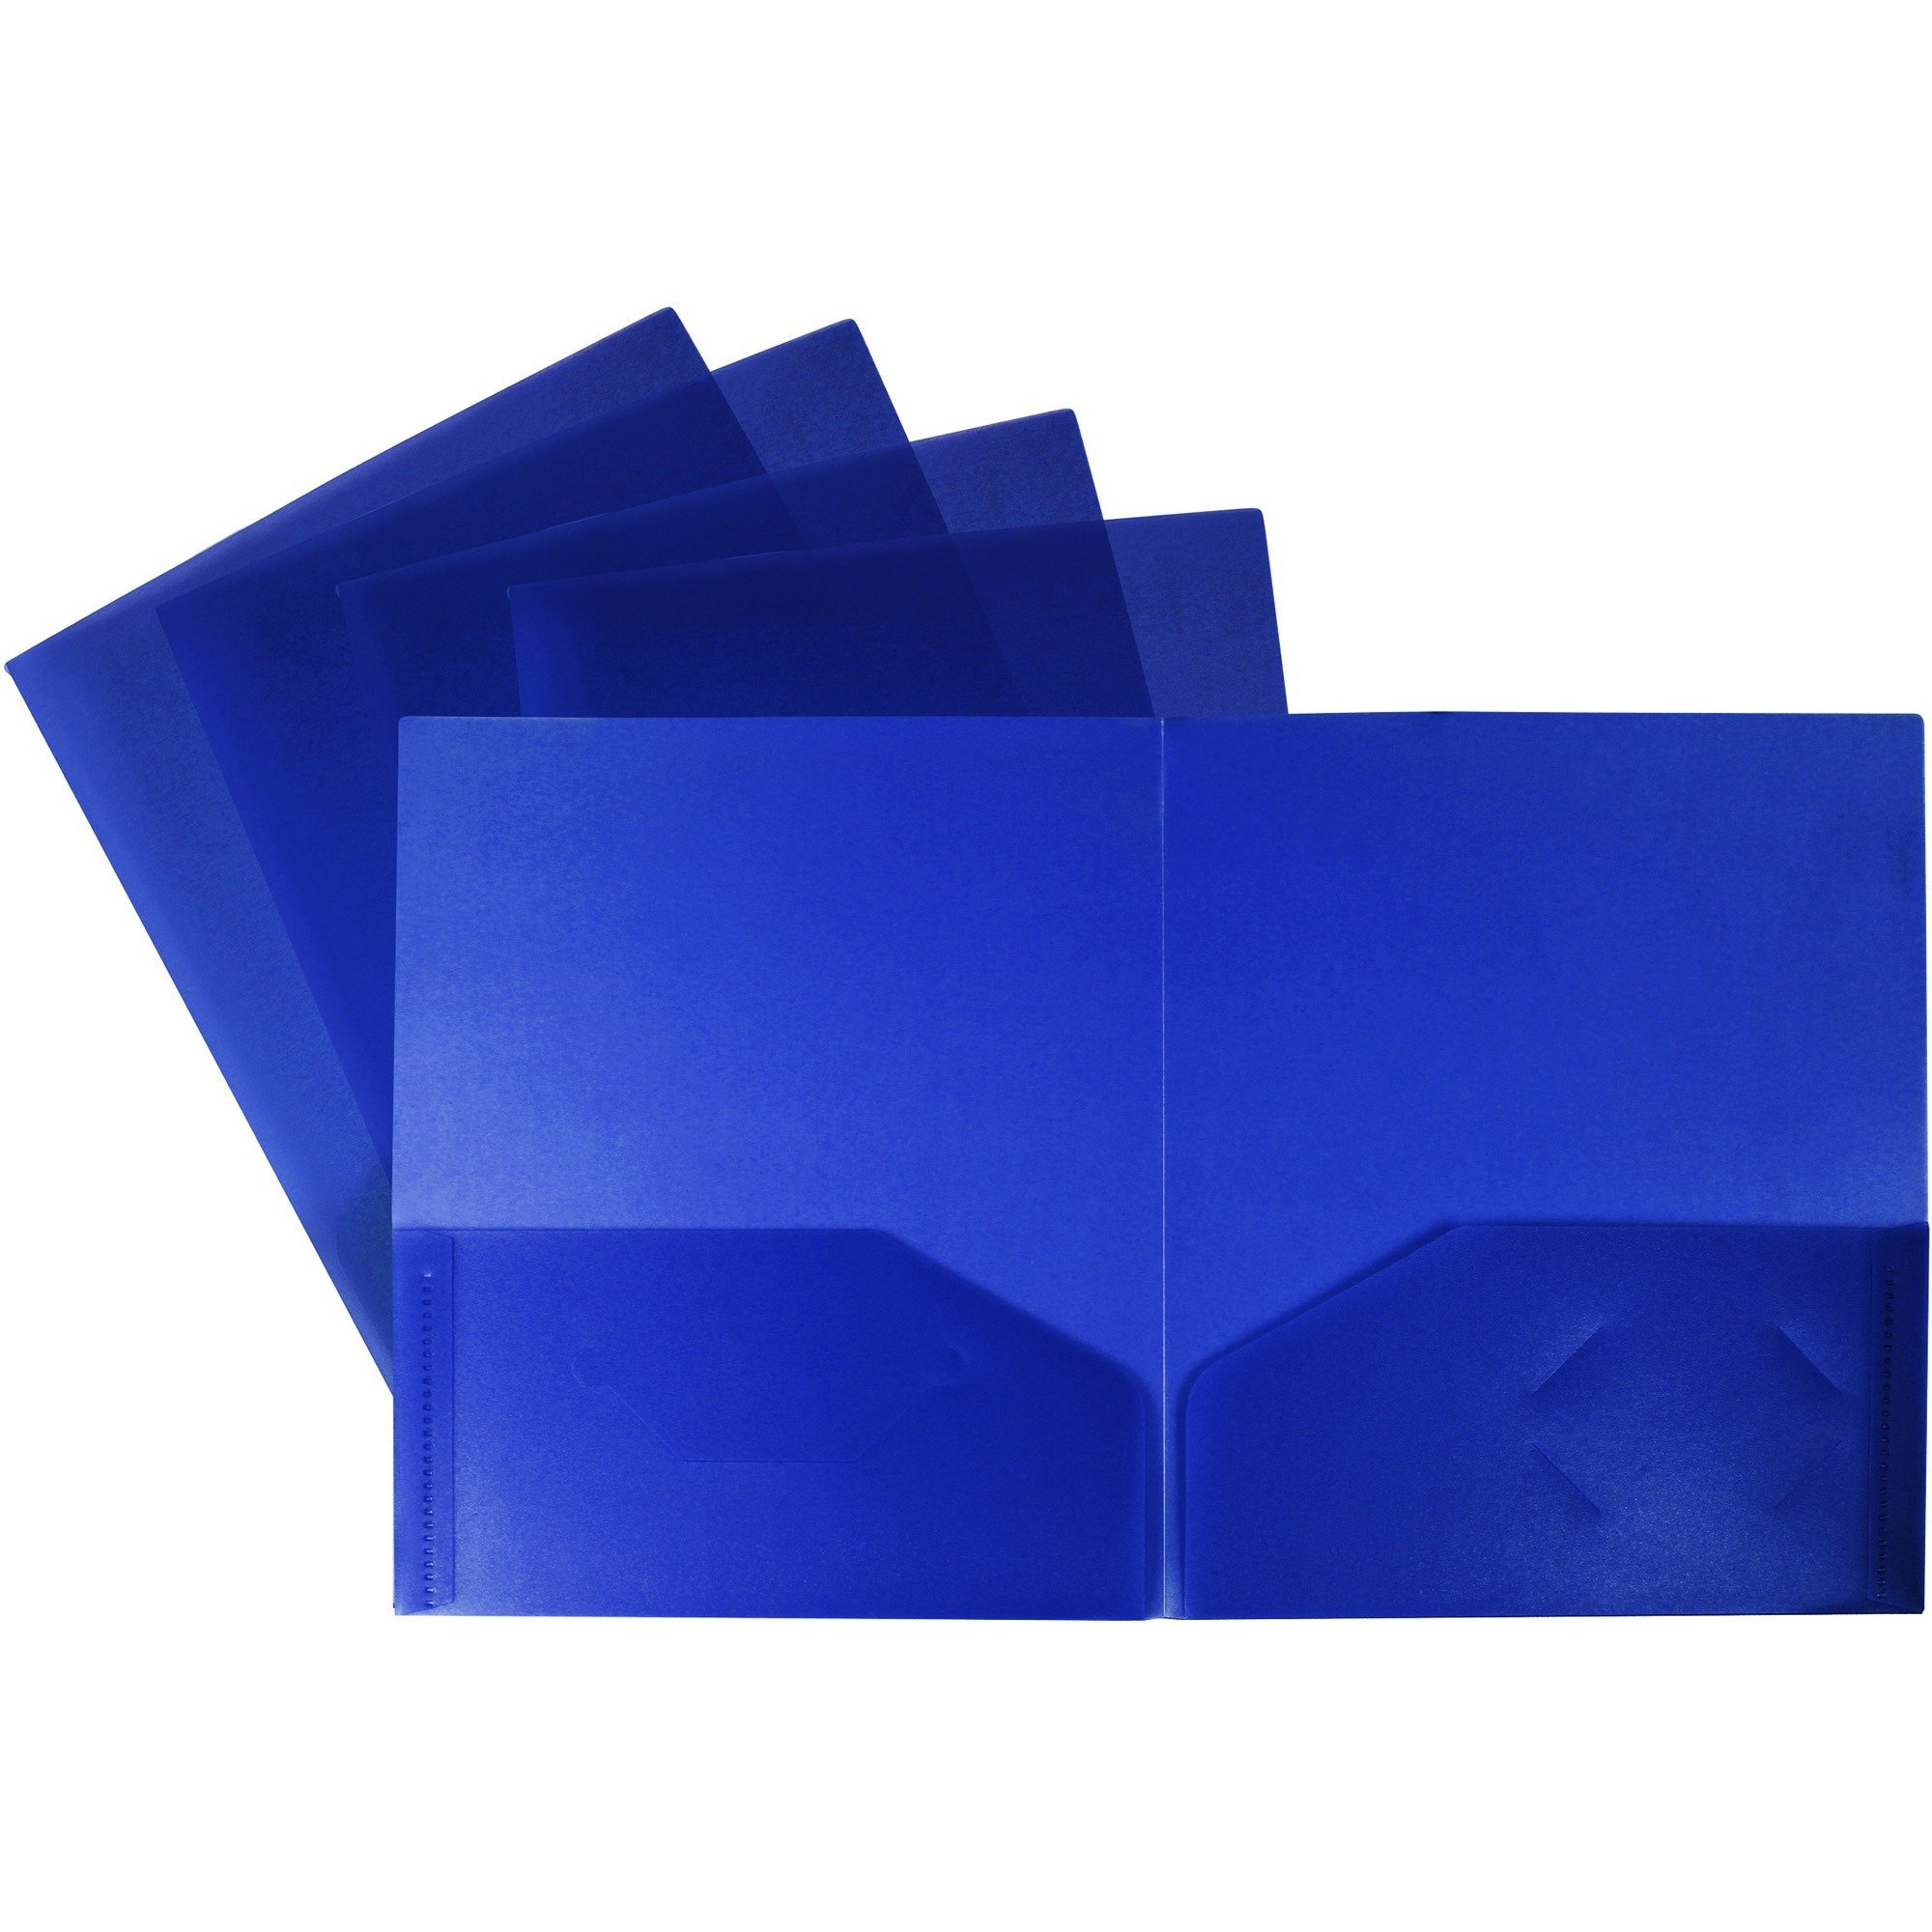 Storex Twin Pocket Blue Portfolio - Each